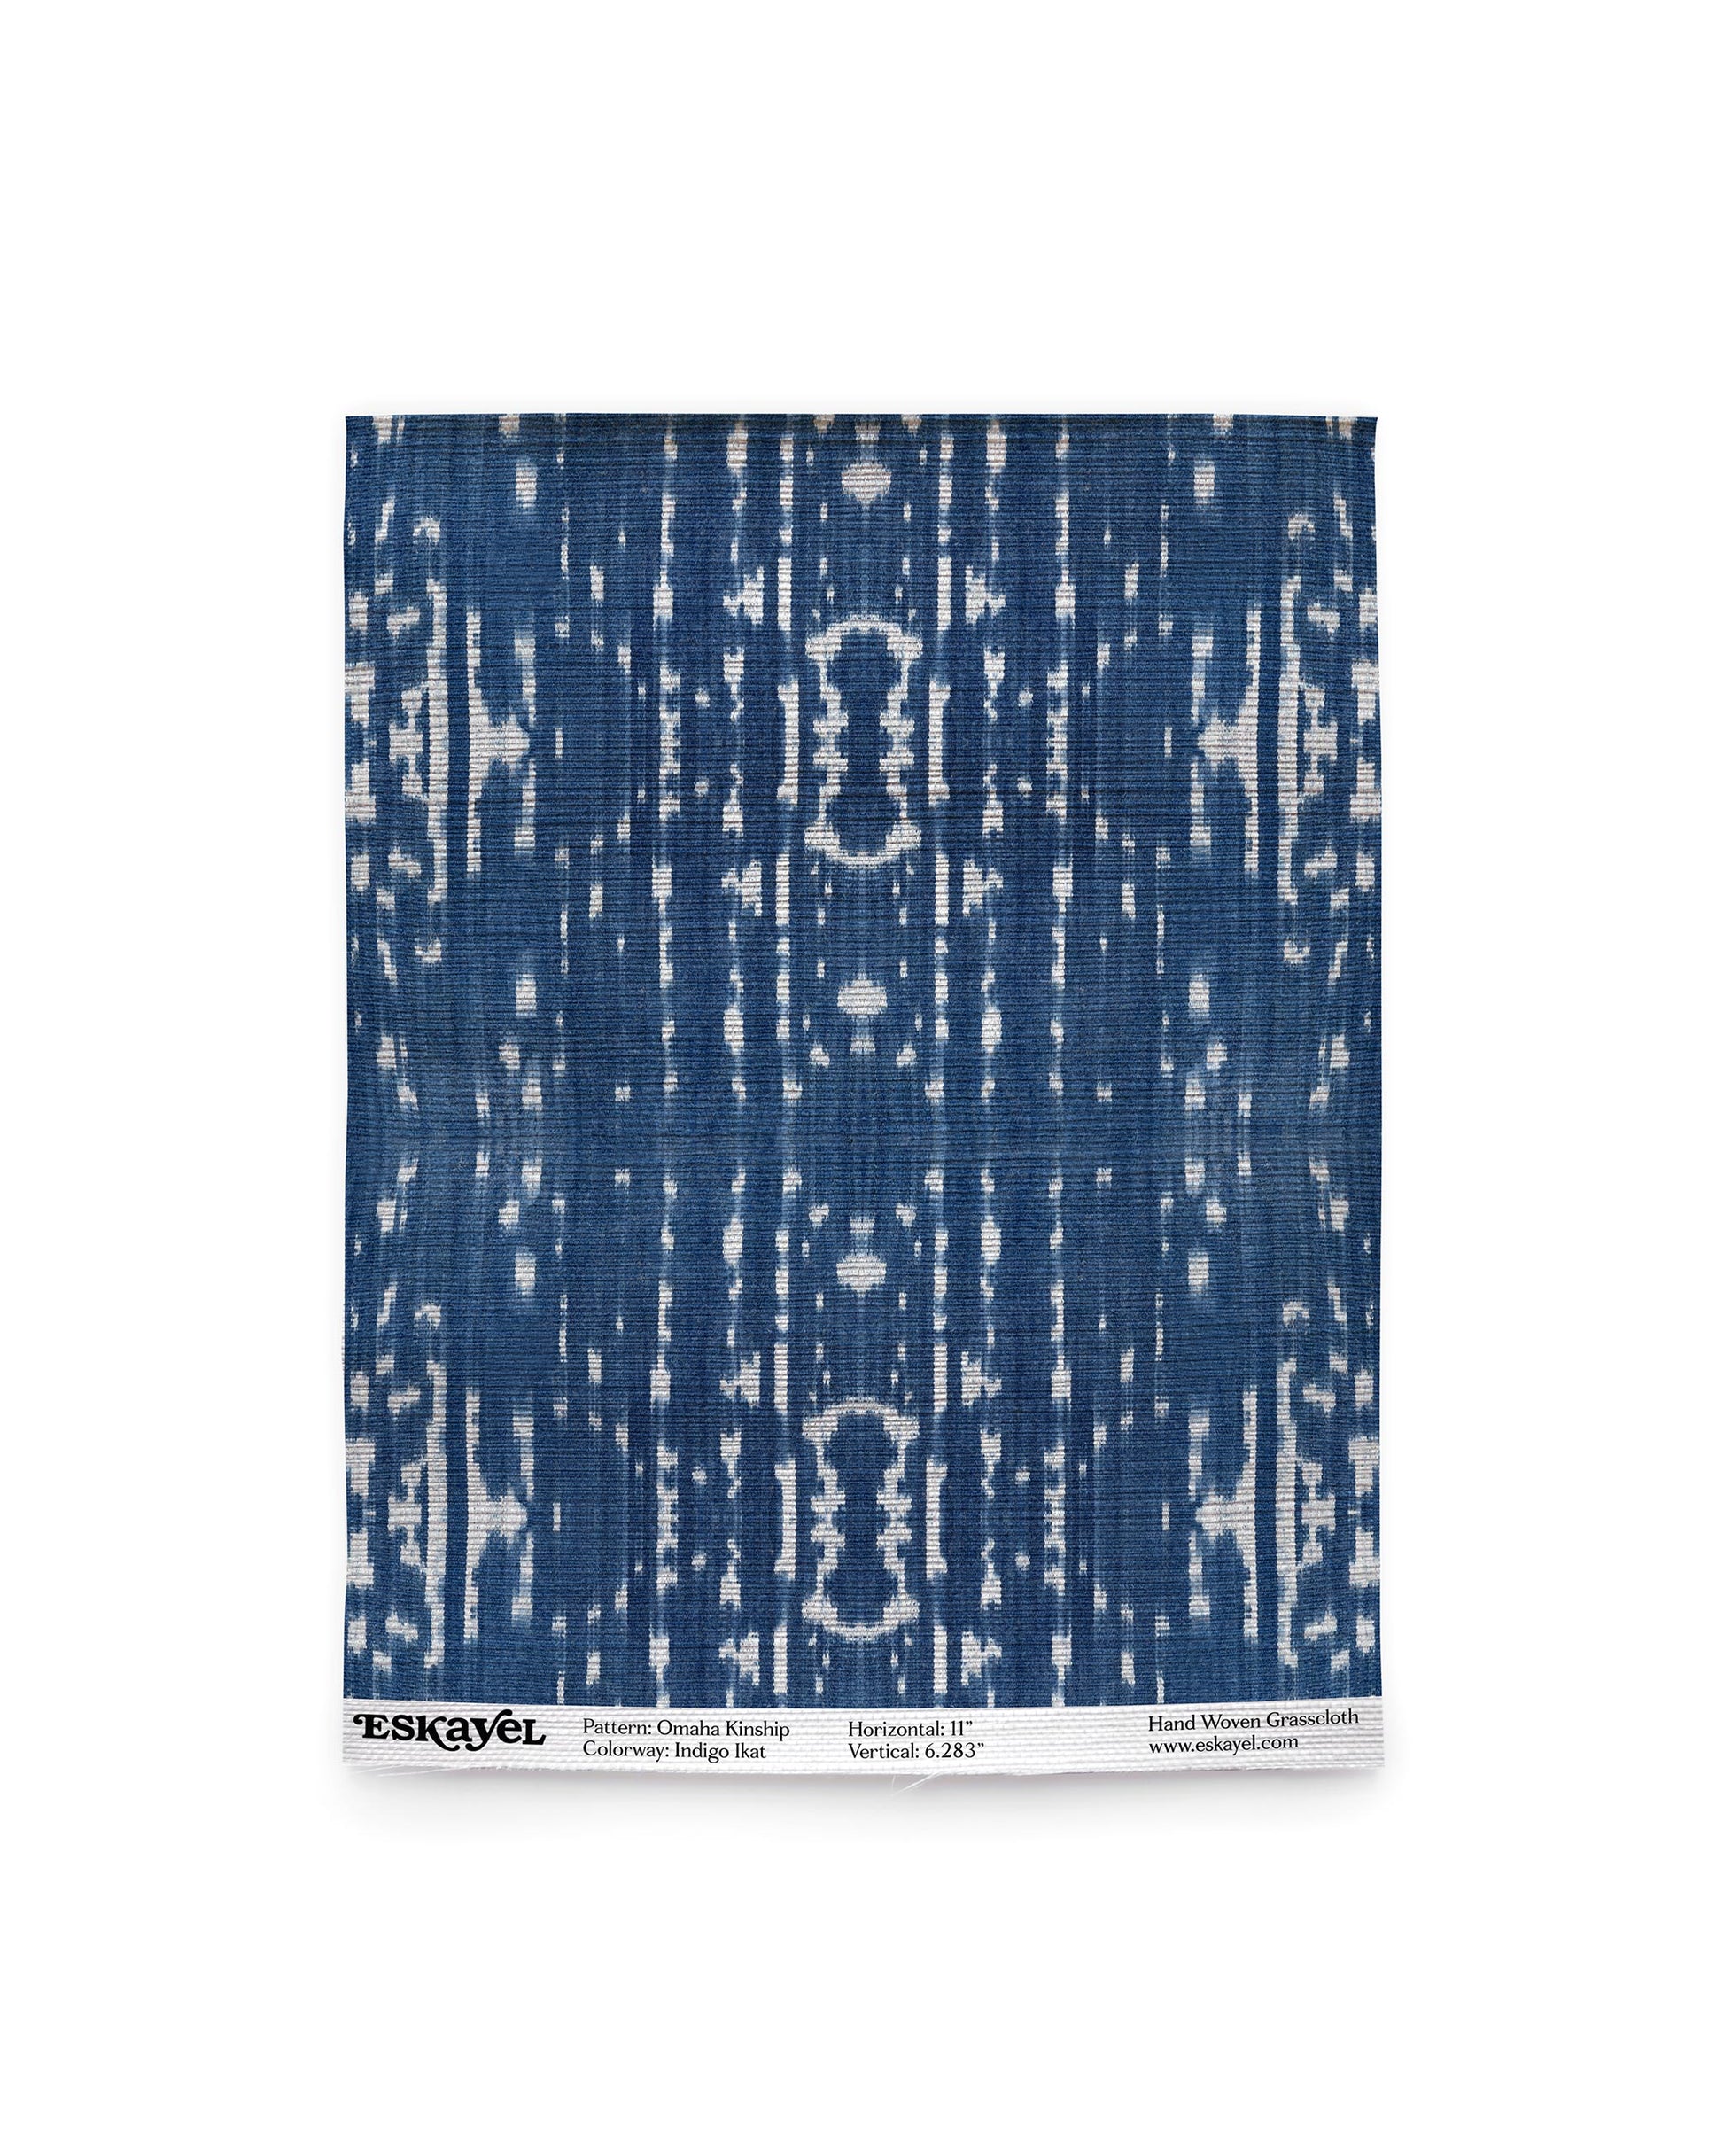 An Omaha Kinship Grasscloth pattern on a blue background